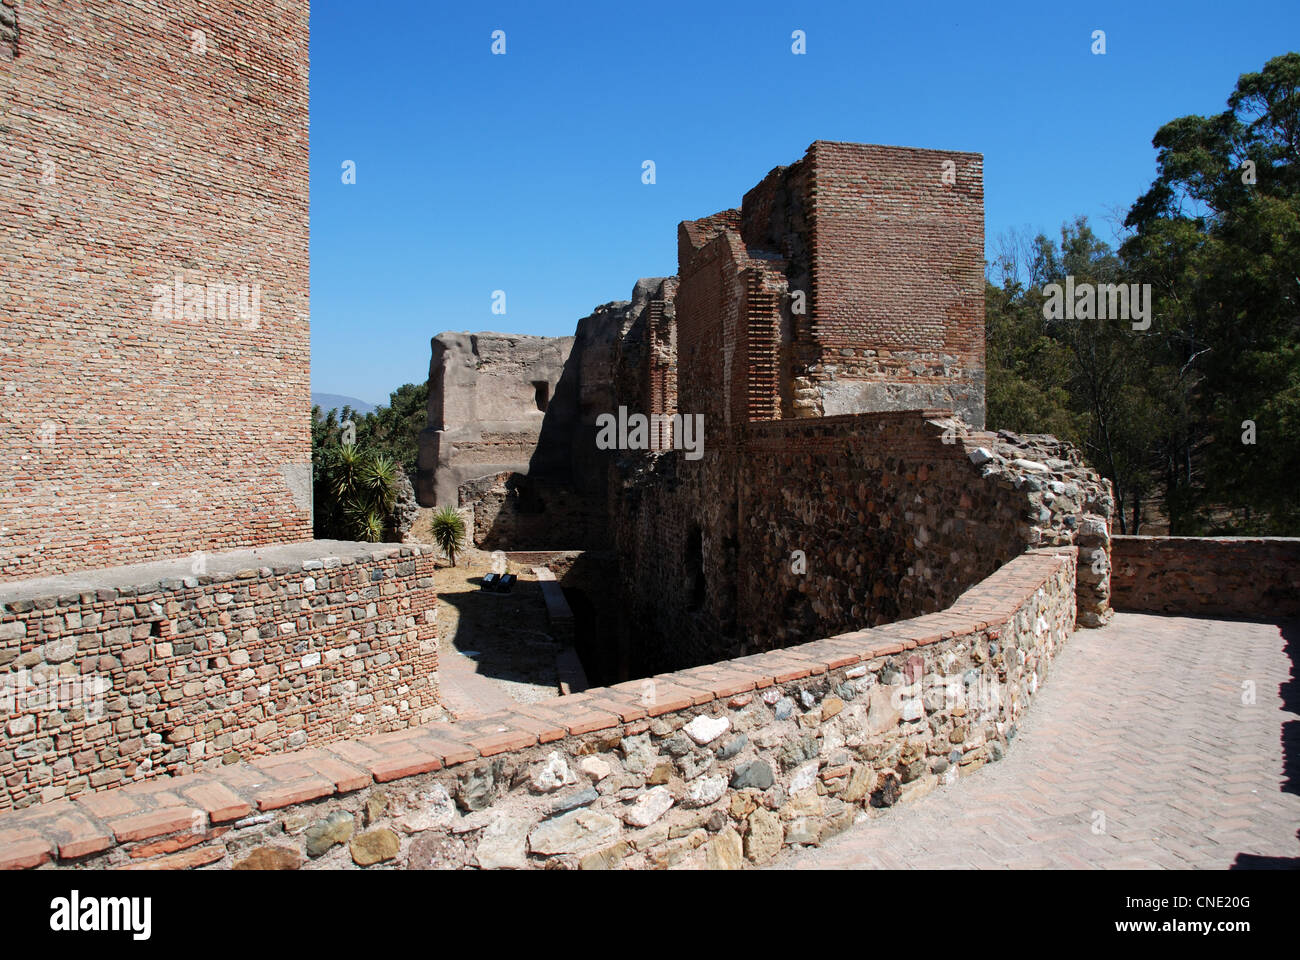 Walls of the citadel, Alcazaba de Malaga, Malaga, Costa del Sol, Malaga Province, Andalucia, Spain, Western Europe. Stock Photo